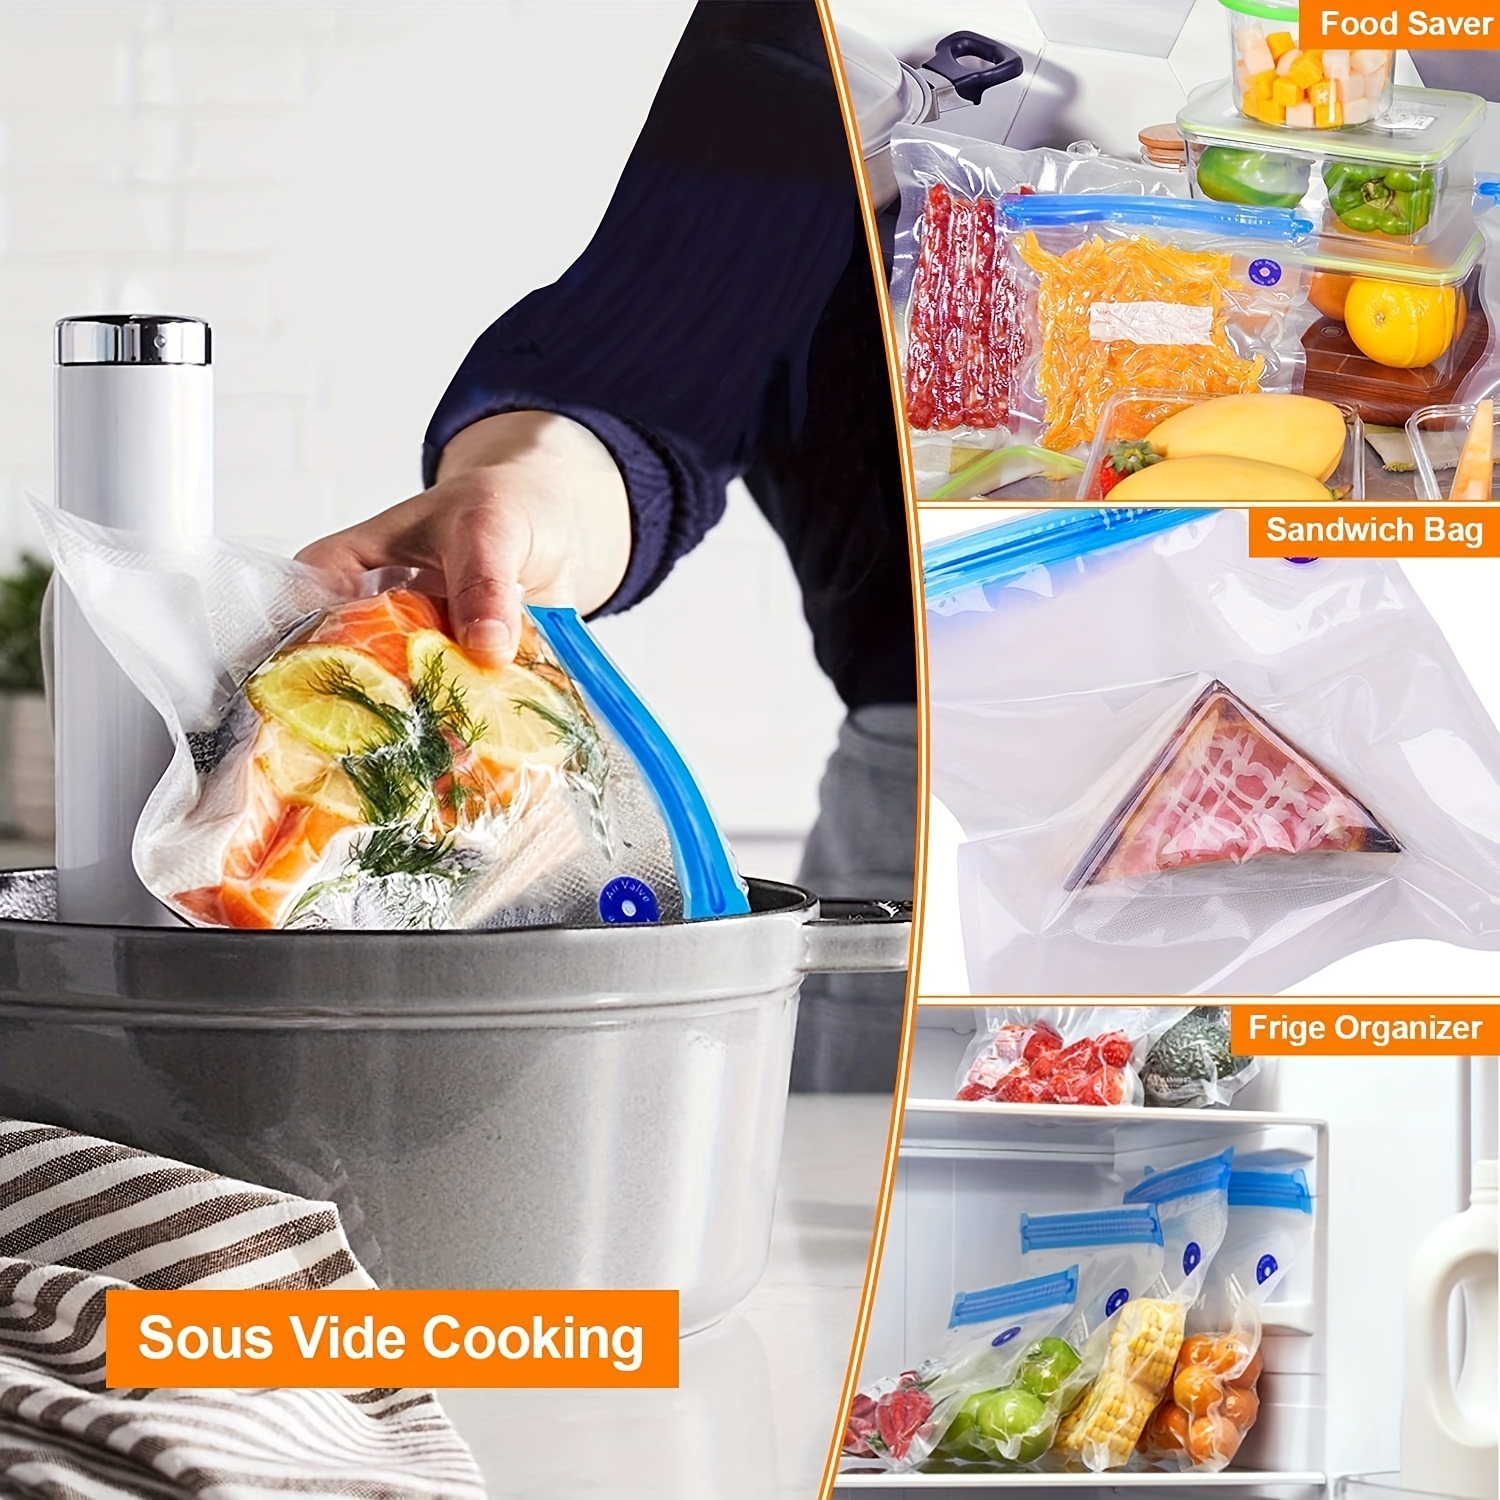 Sous Vide Bags (30 pack)  Food saver, Sous vide cooking, Sous